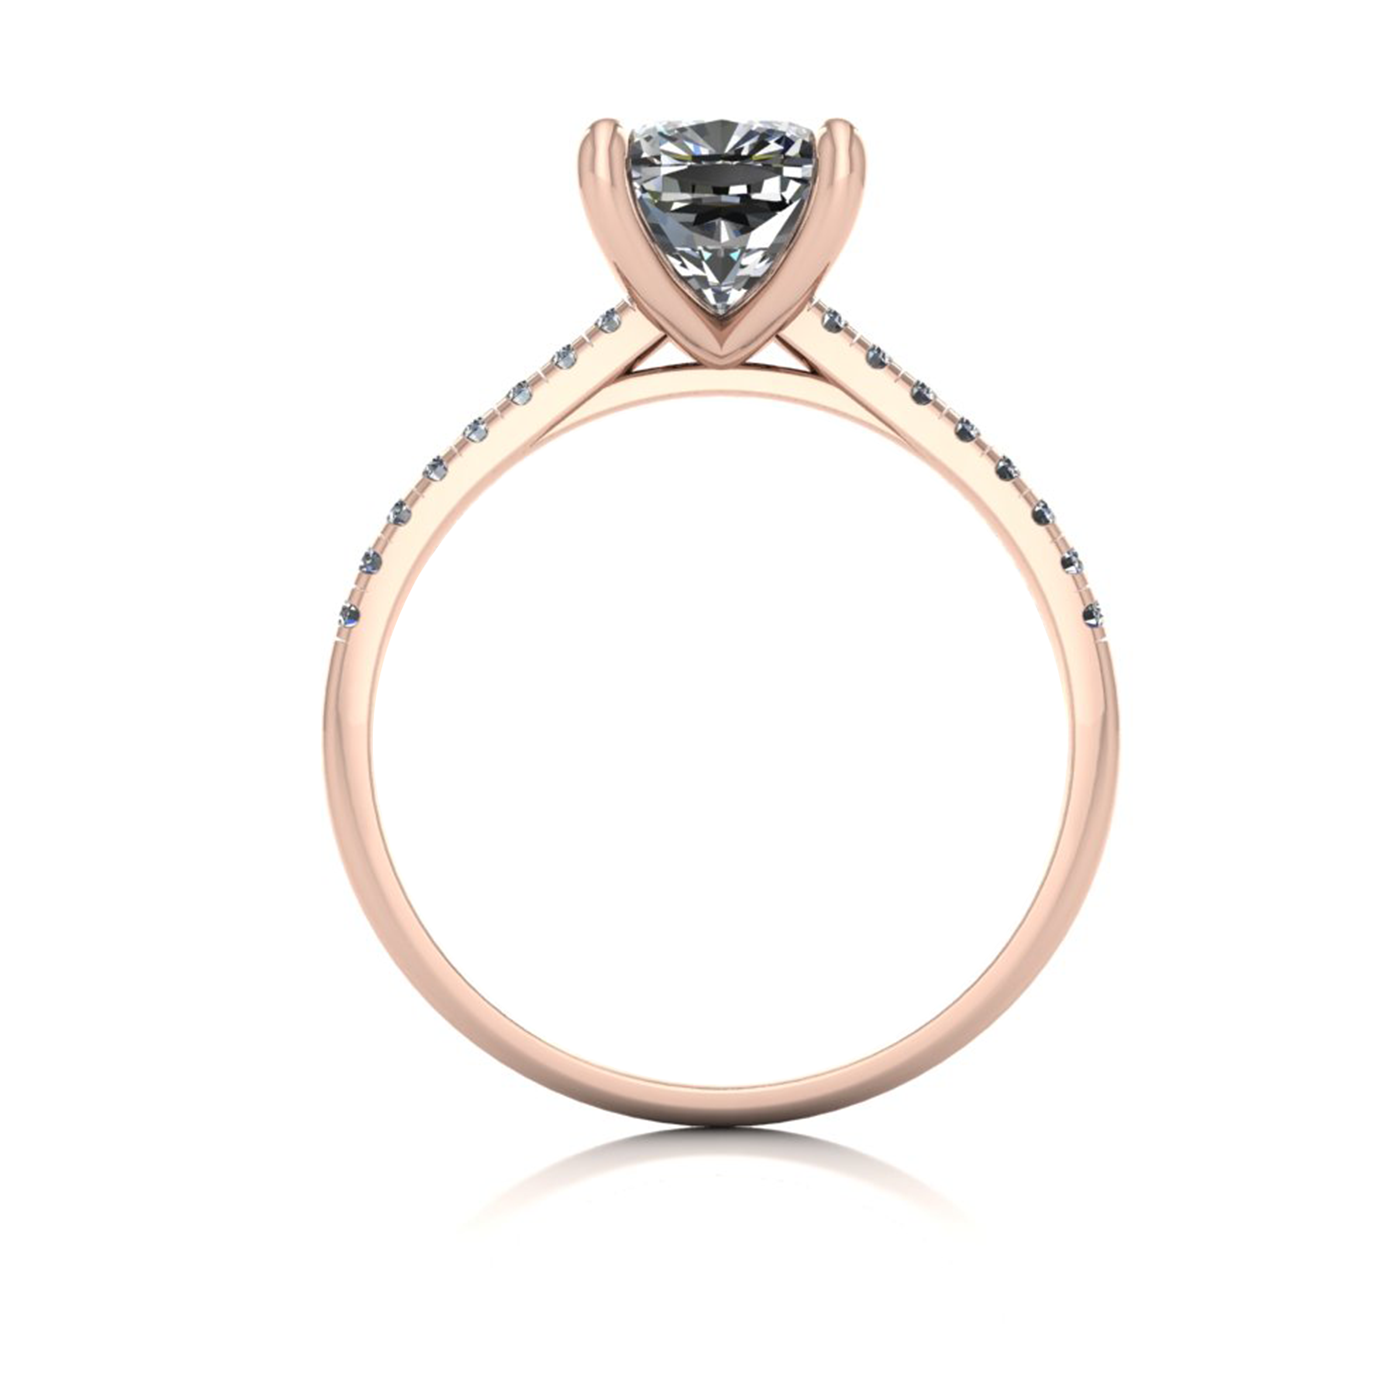 18k rose gold 2.0ct 4 prongs cushion cut diamond engagement ring with whisper thin pavÉ set band